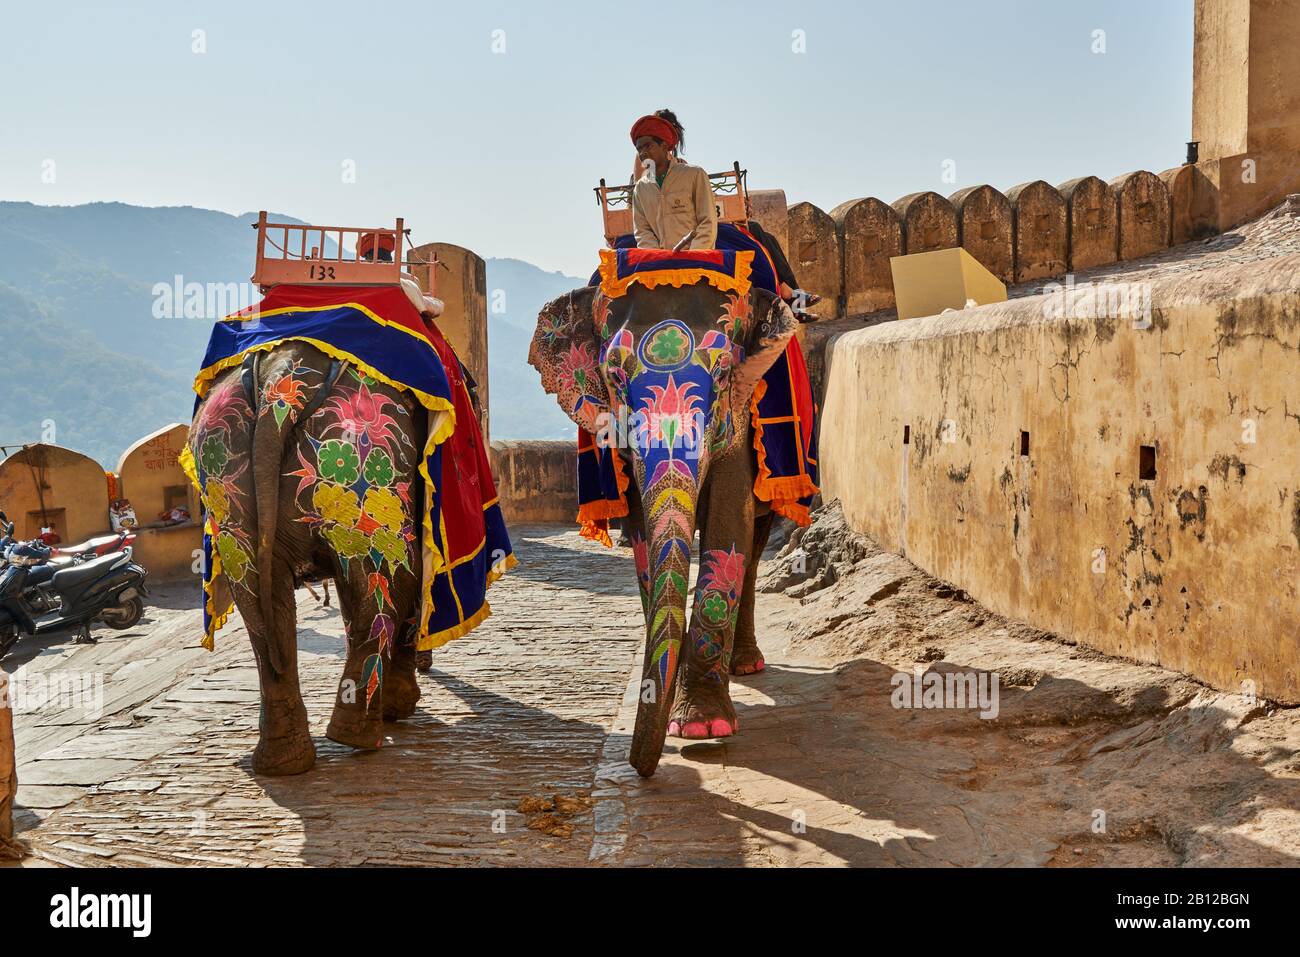 Gli elefanti indiani dai colori vivaci portano i turisti al Forte Amer, Jaipur, Rajasthan, India Foto Stock